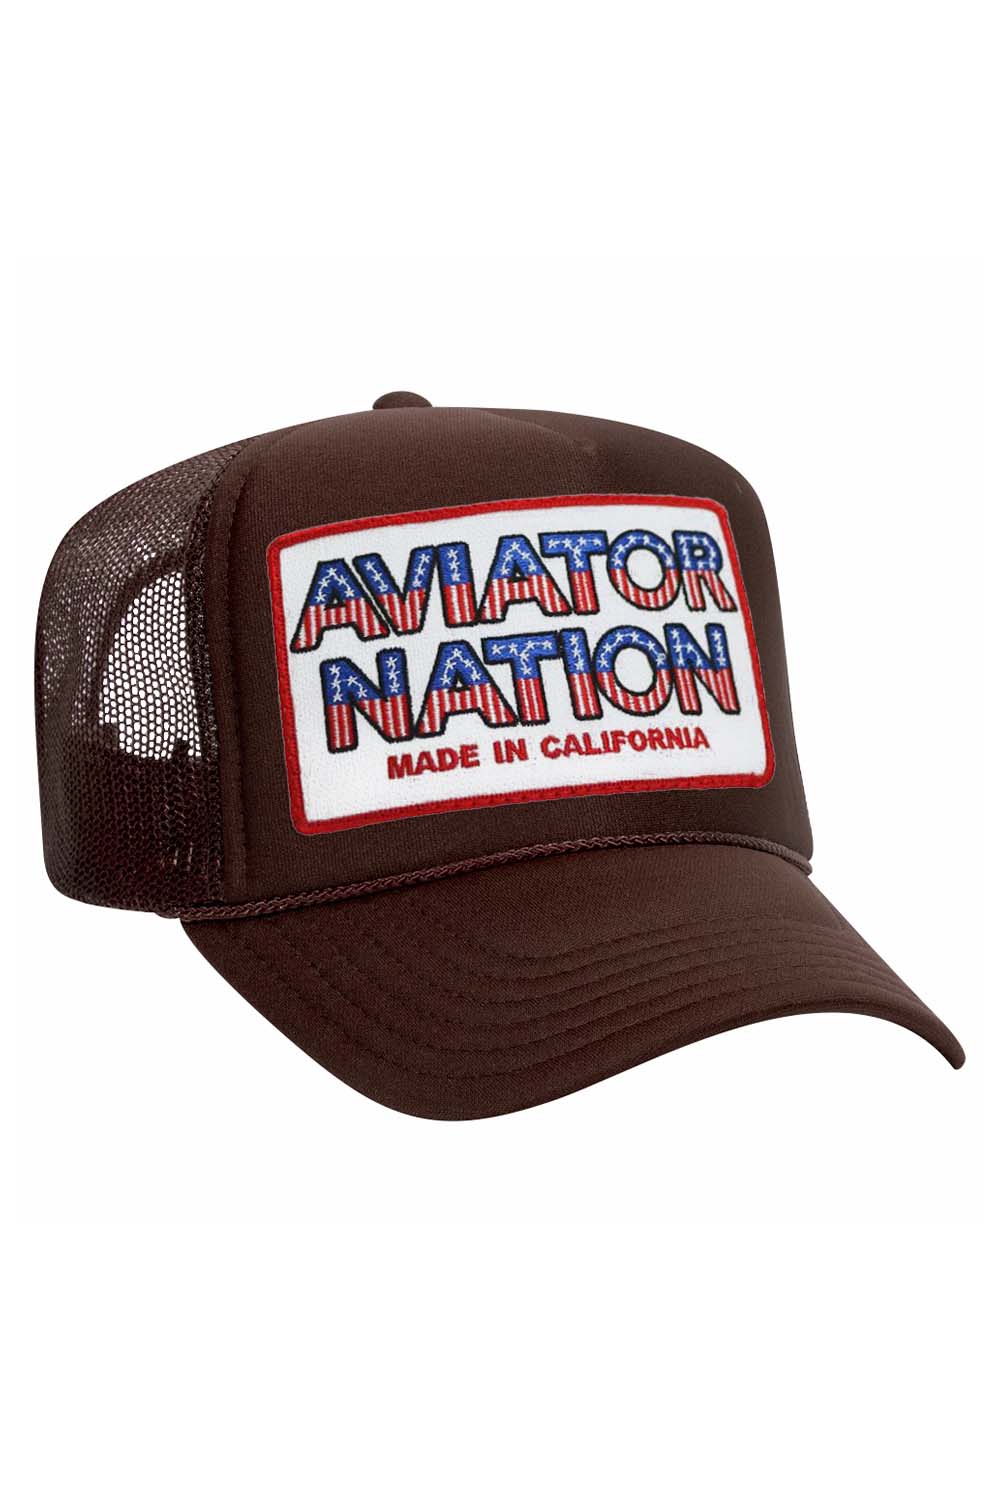 AVIATOR NATION USA PATRIOTIC VINTAGE TRUCKER HAT HATS Aviator Nation OS BROWN 